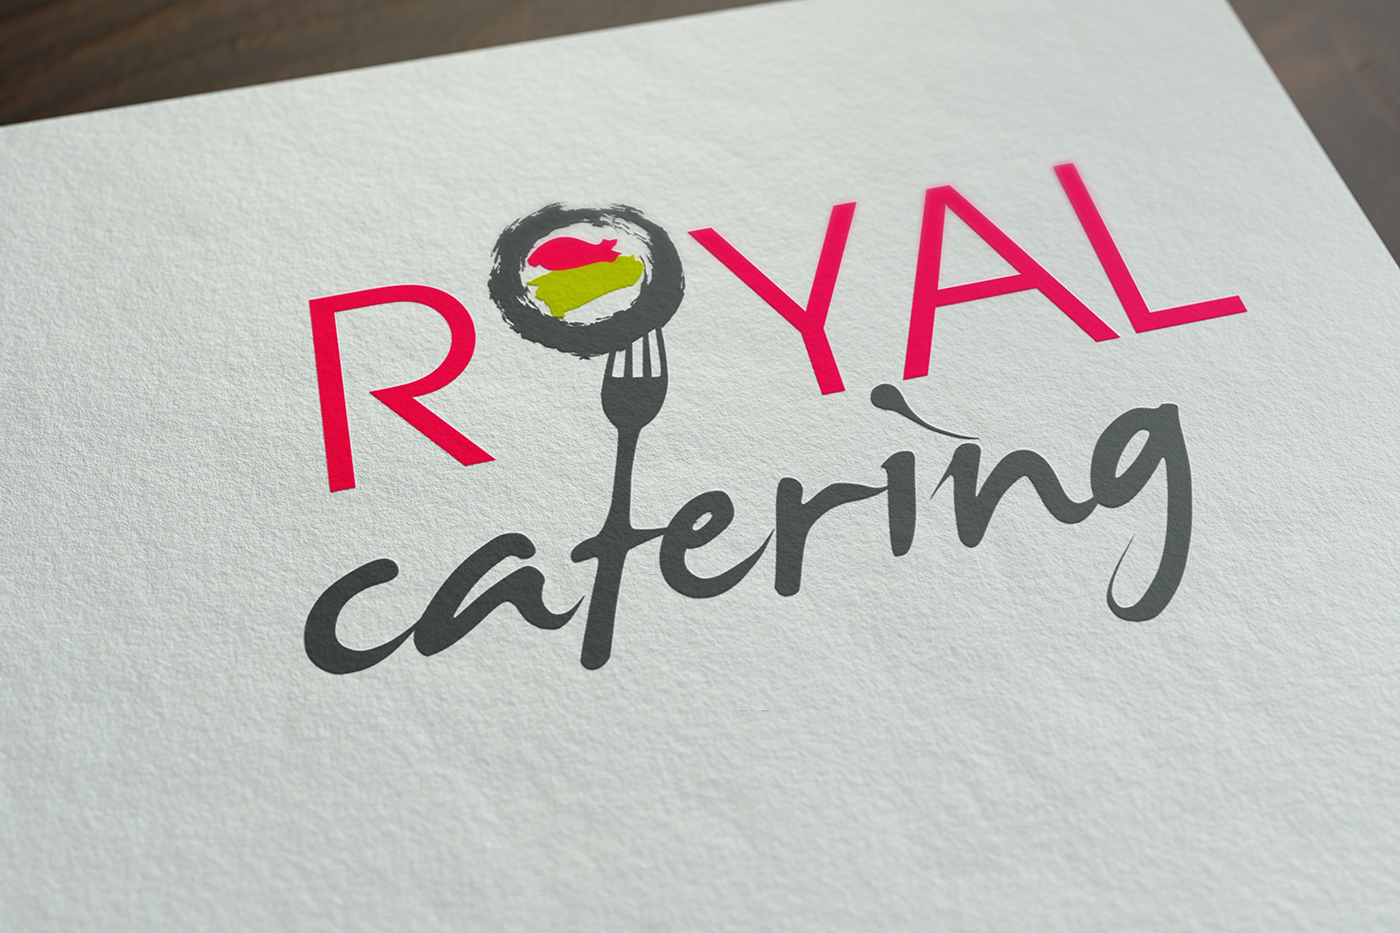 Royal catering logo design cateringlogo